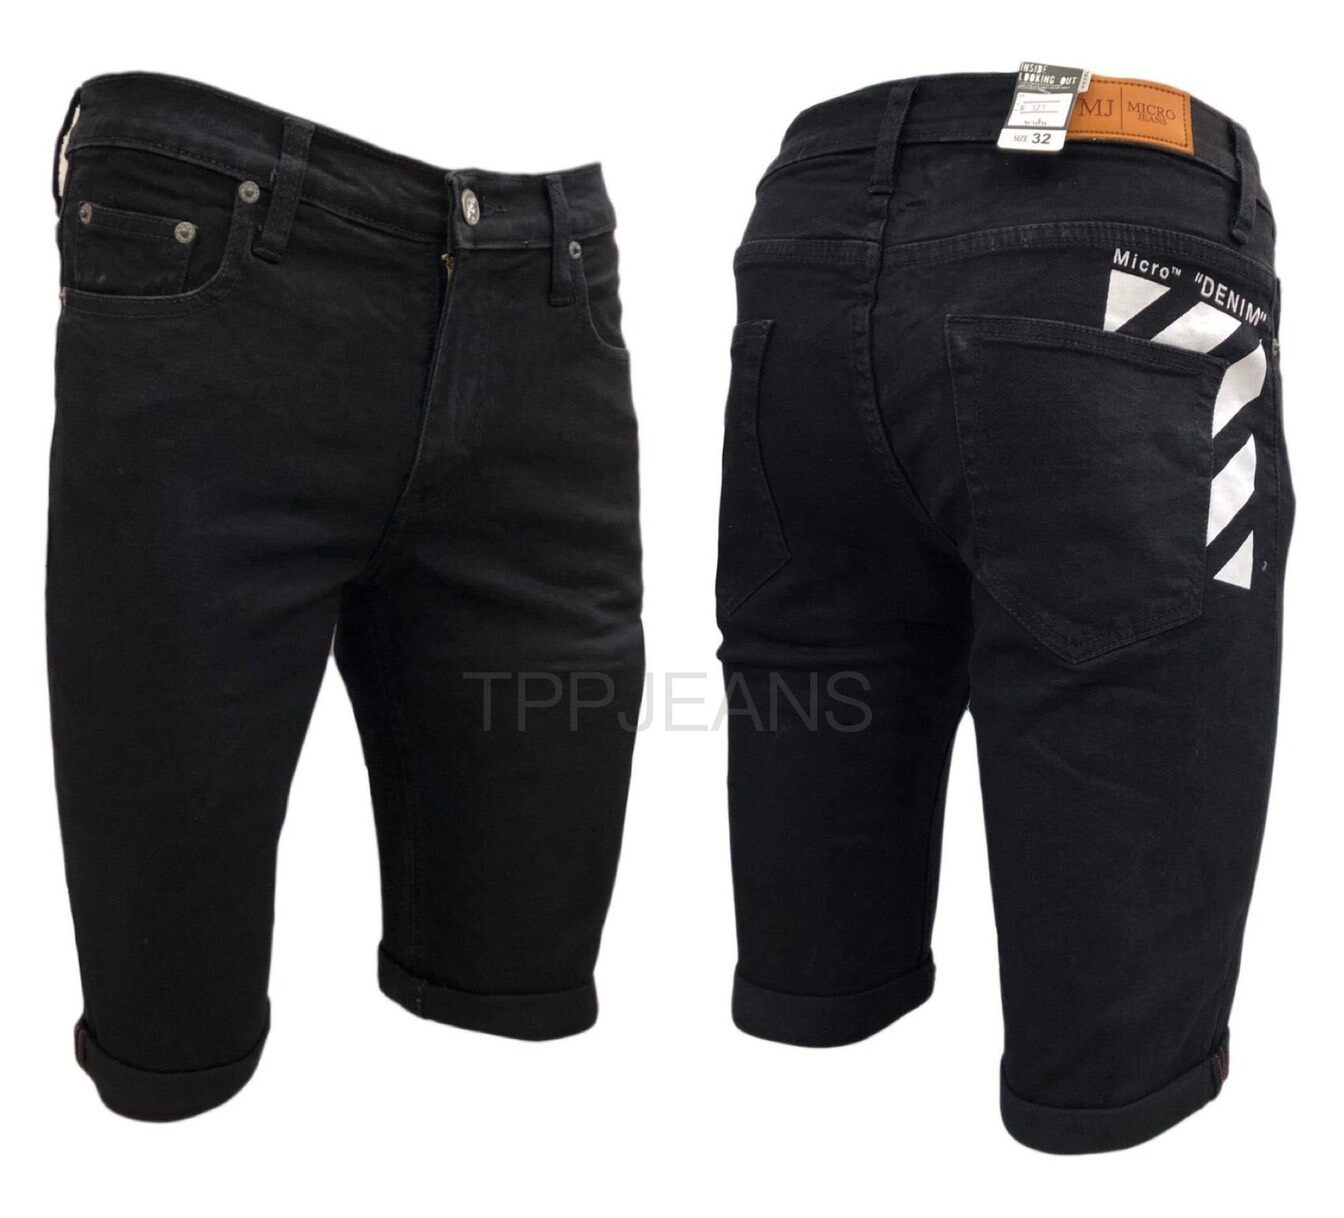 TPPJEANS Micro BlackxBlack Shorts mens กางเกงยีนส์ขาสั้นดำทรงสลิม ผ้ายืด เป้าซิป ใส่สบาย งานสกรีนเนียน Size 28-36